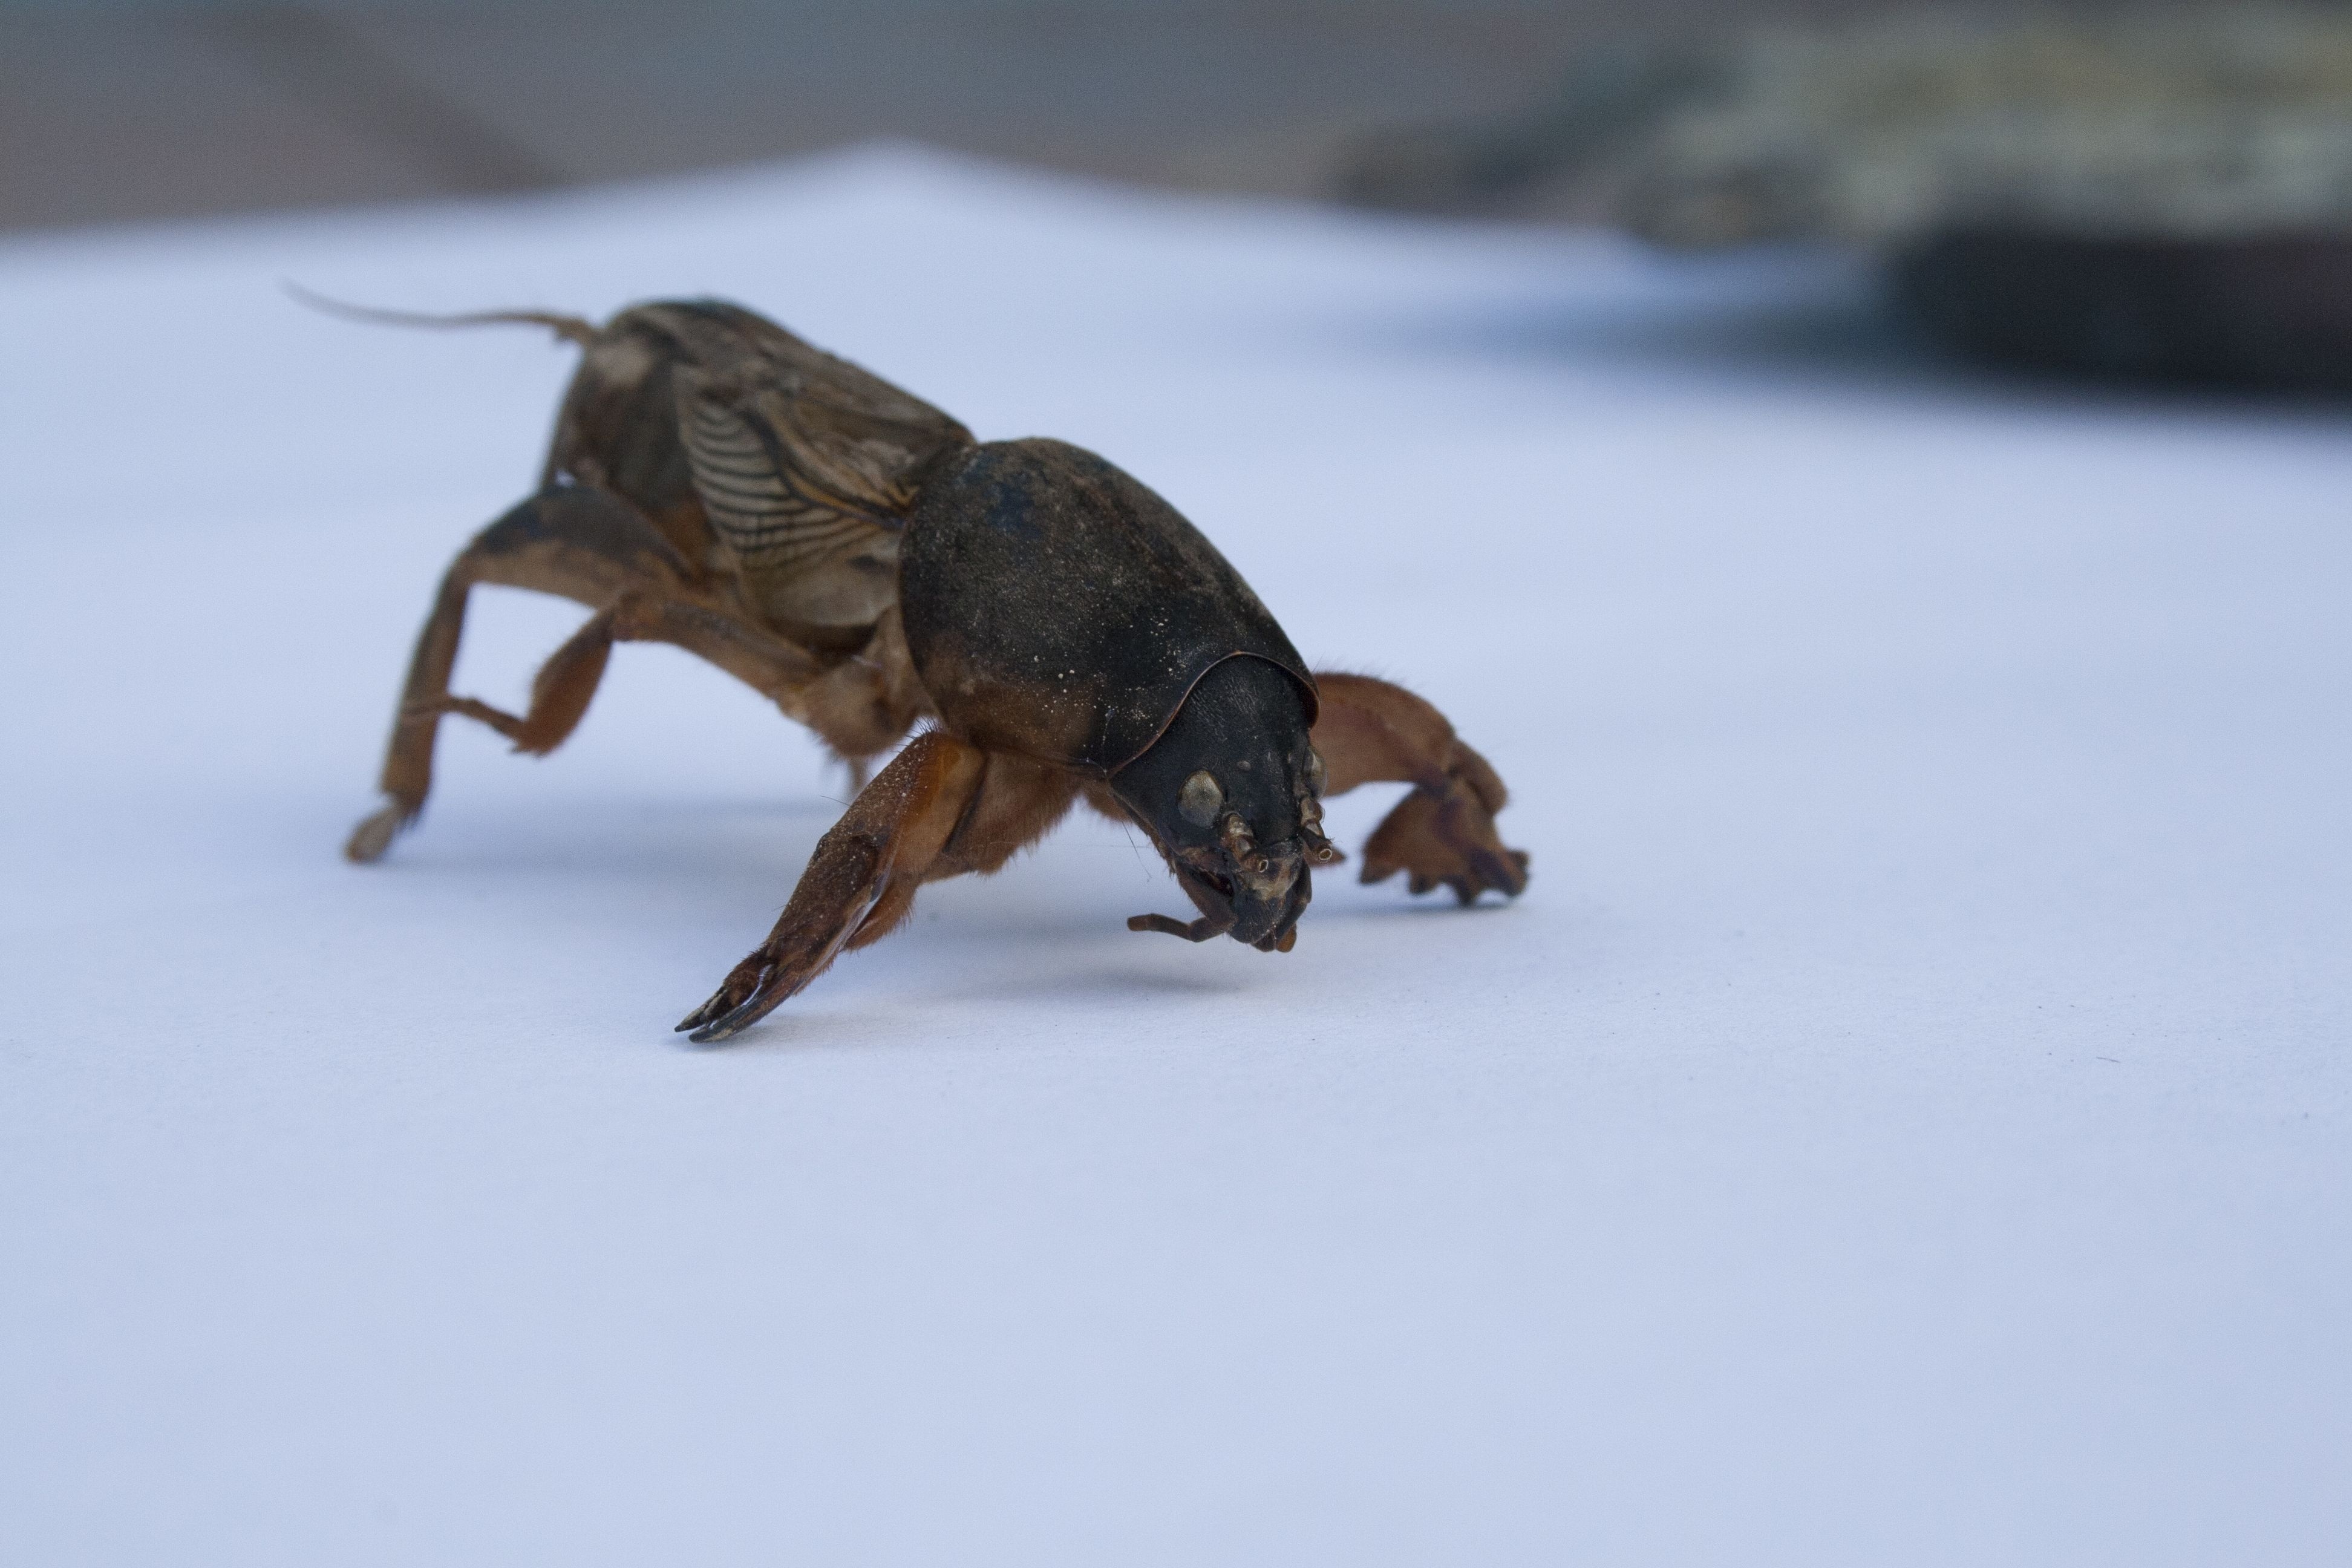 brown and black mole cricket